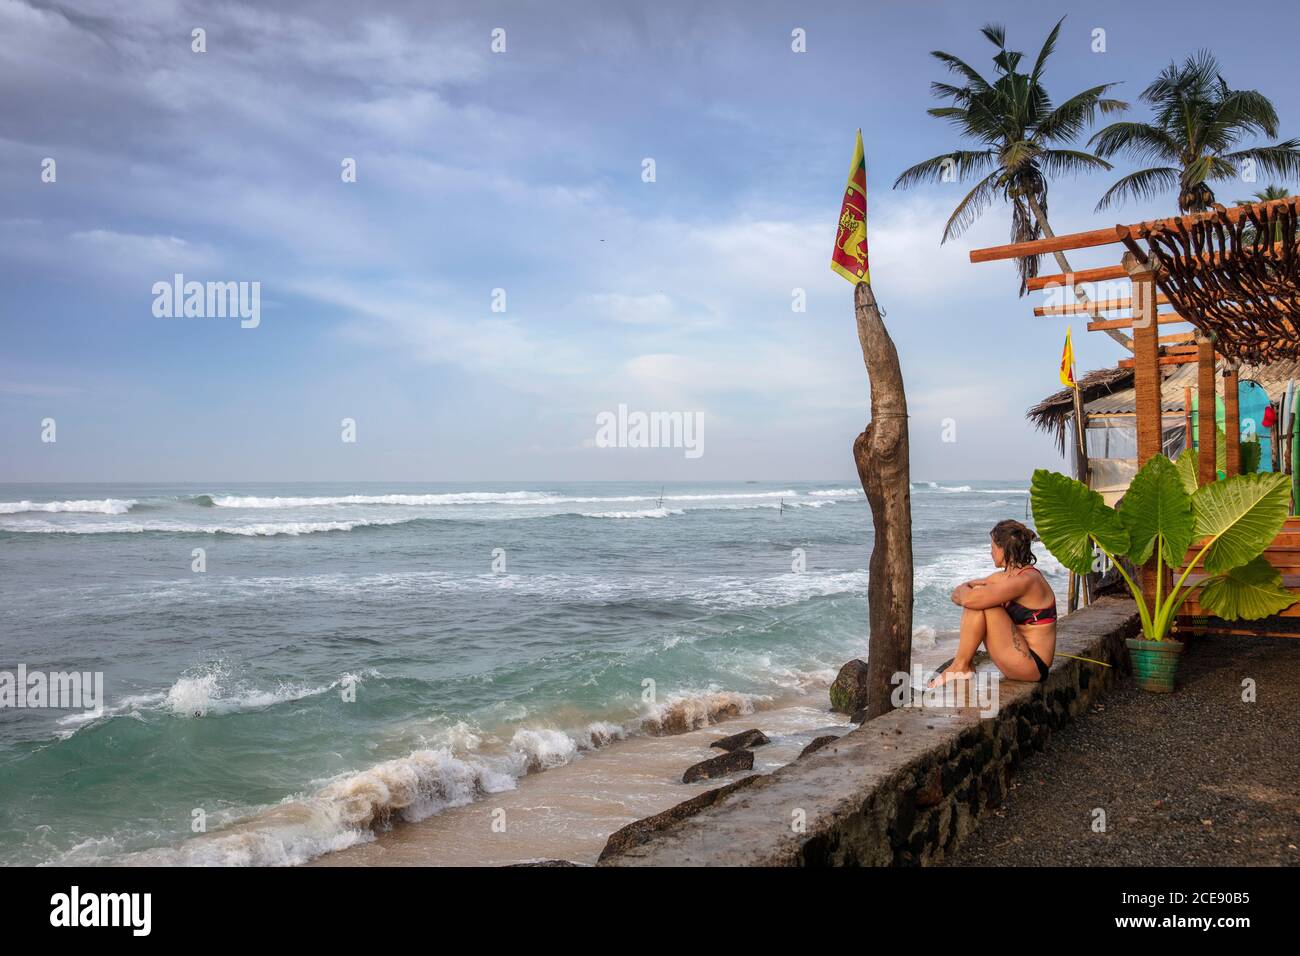 Sri Lanka, Ahangama, Surf beach hotel. Woman looking at the sea from beach bar. Stock Photo